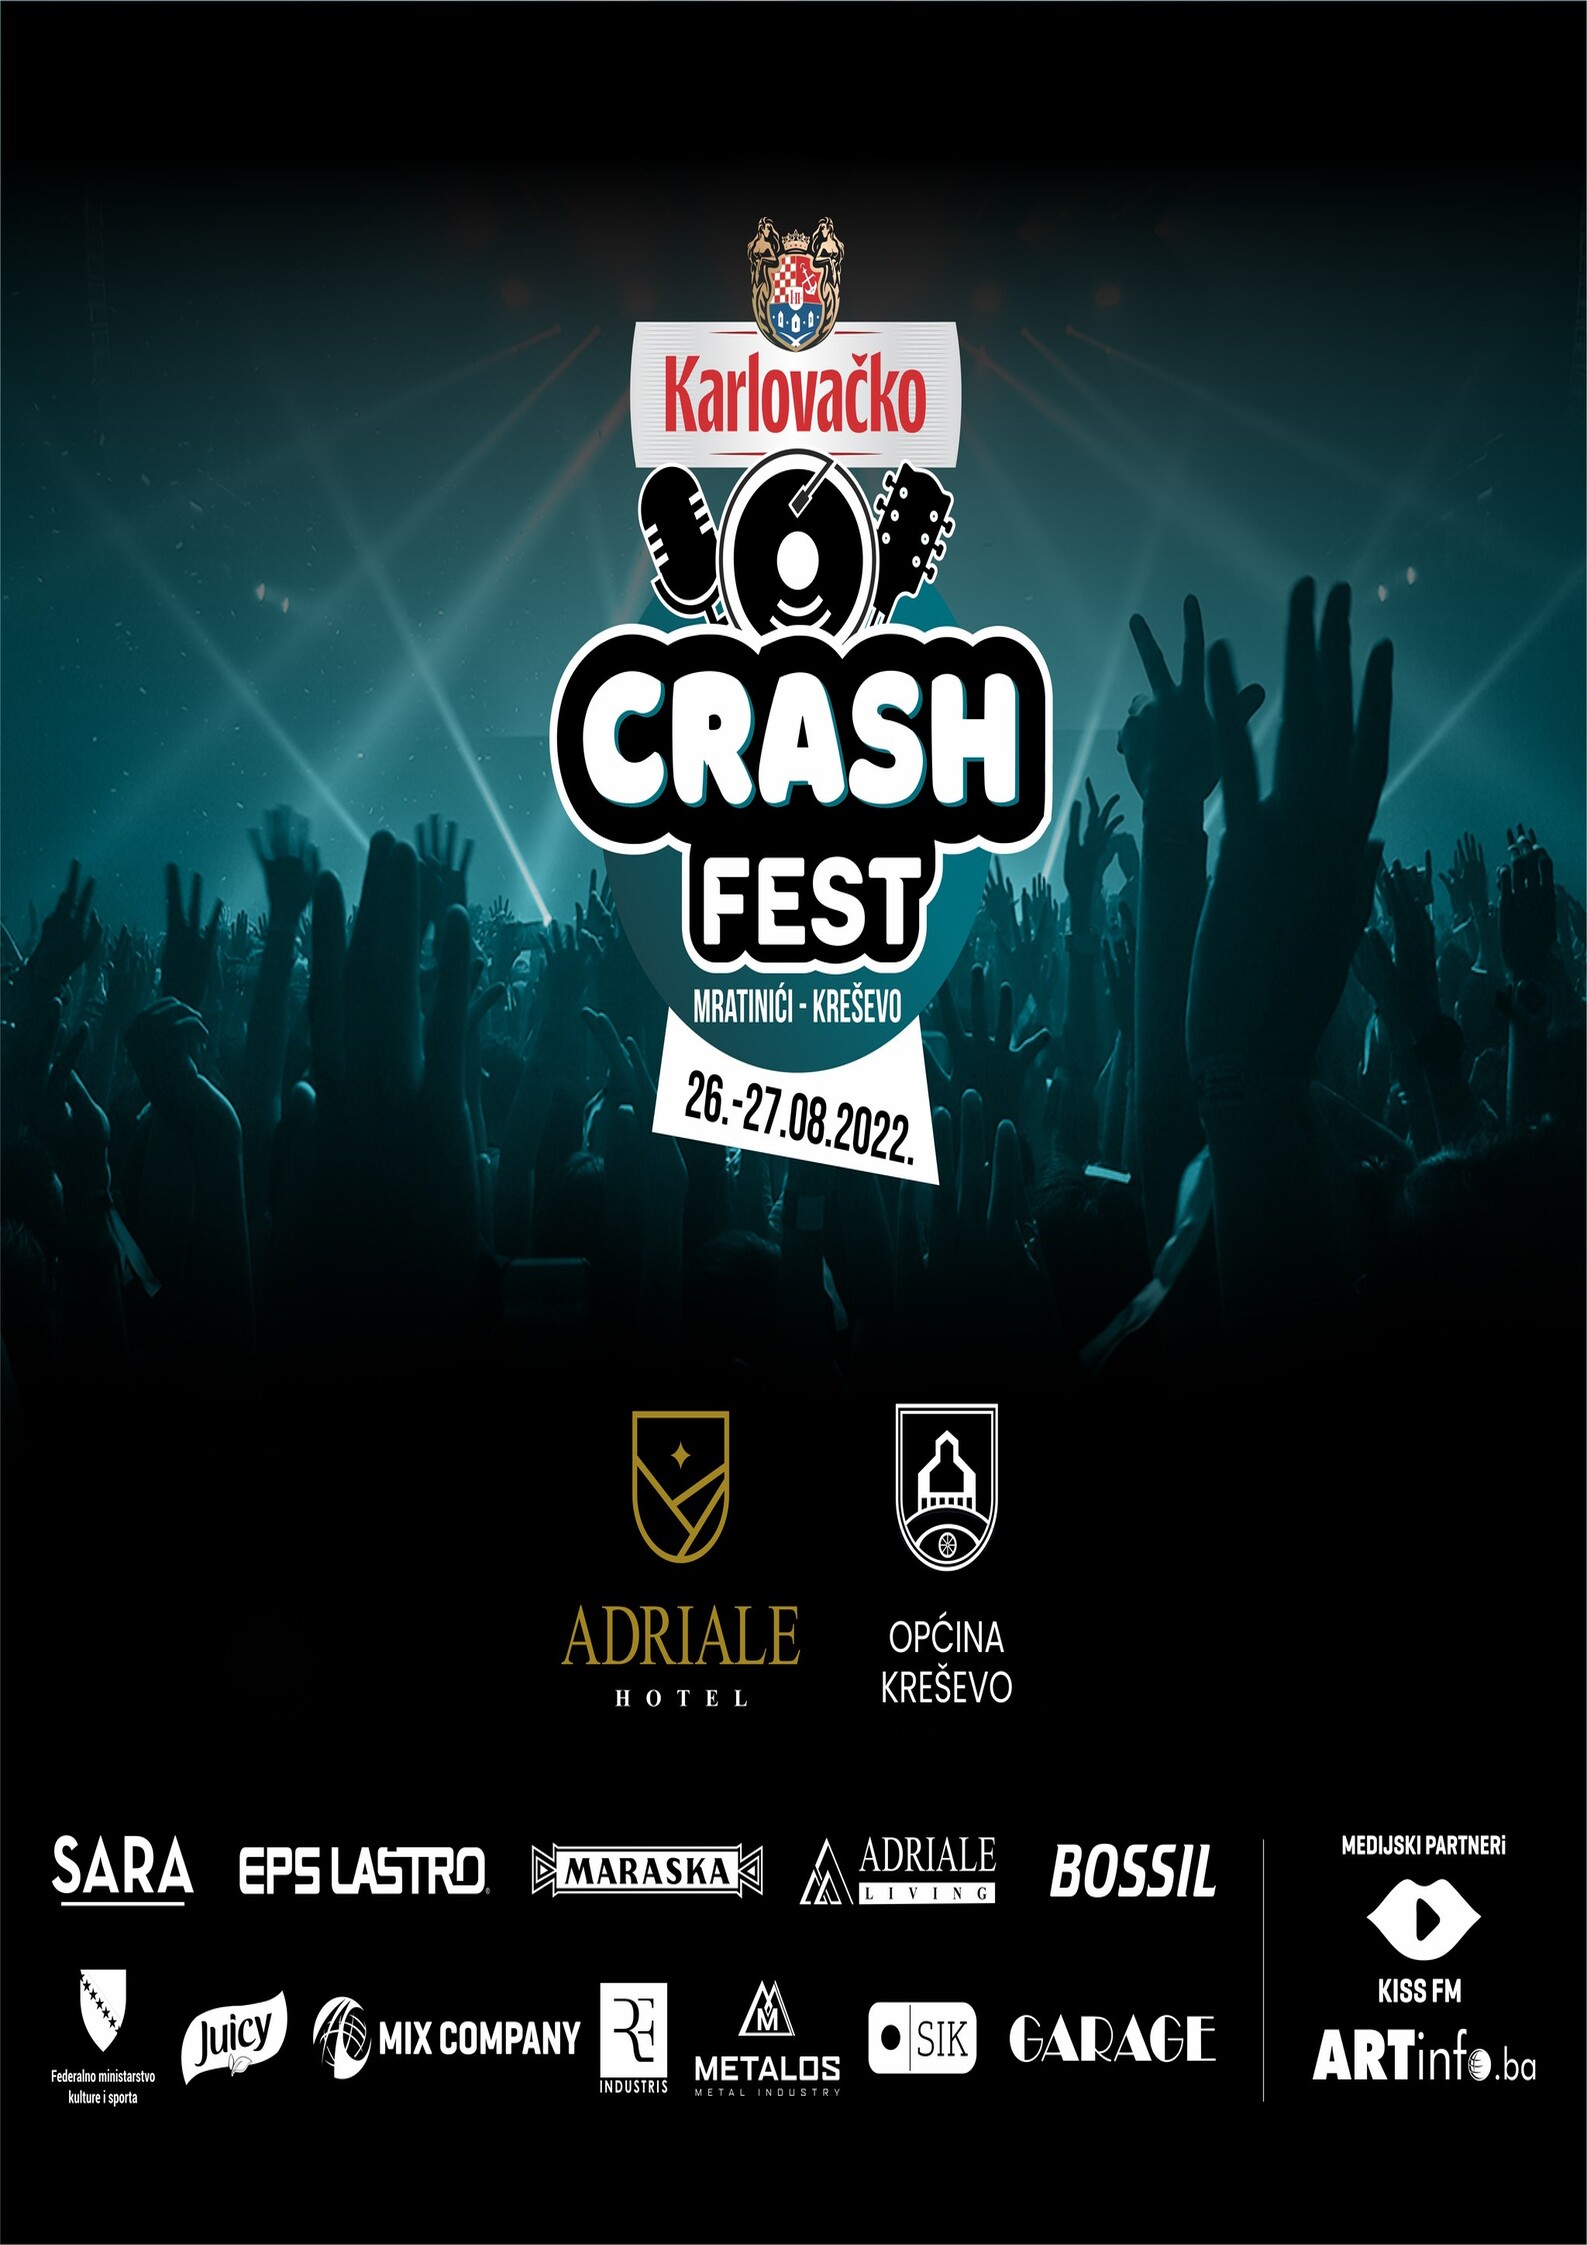 Crash Fest info